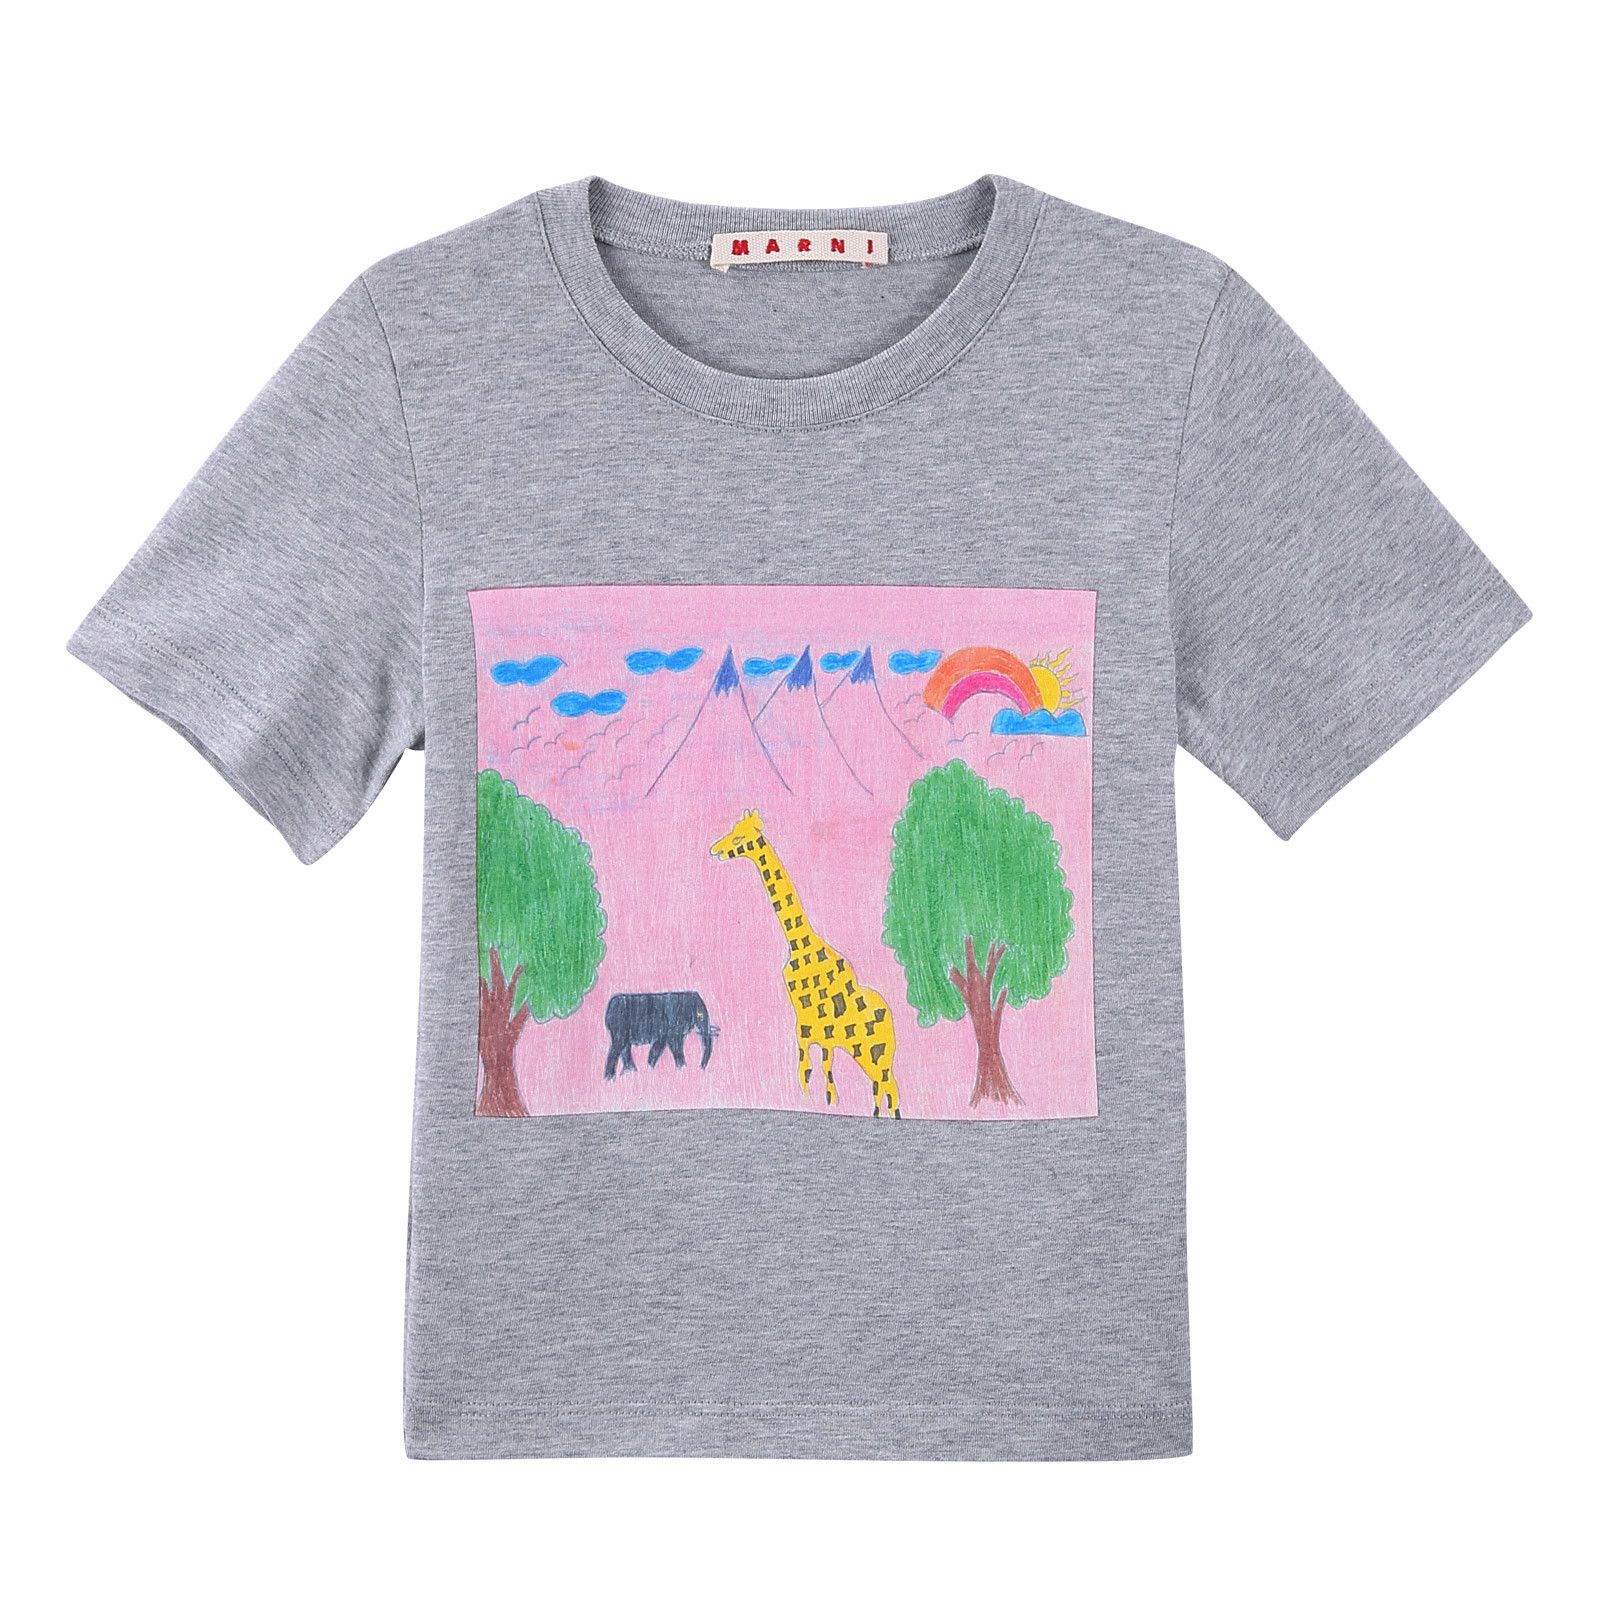 Girls Grey Animal Printed Cotton Jersey T-Shirt - CÉMAROSE | Children's Fashion Store - 1